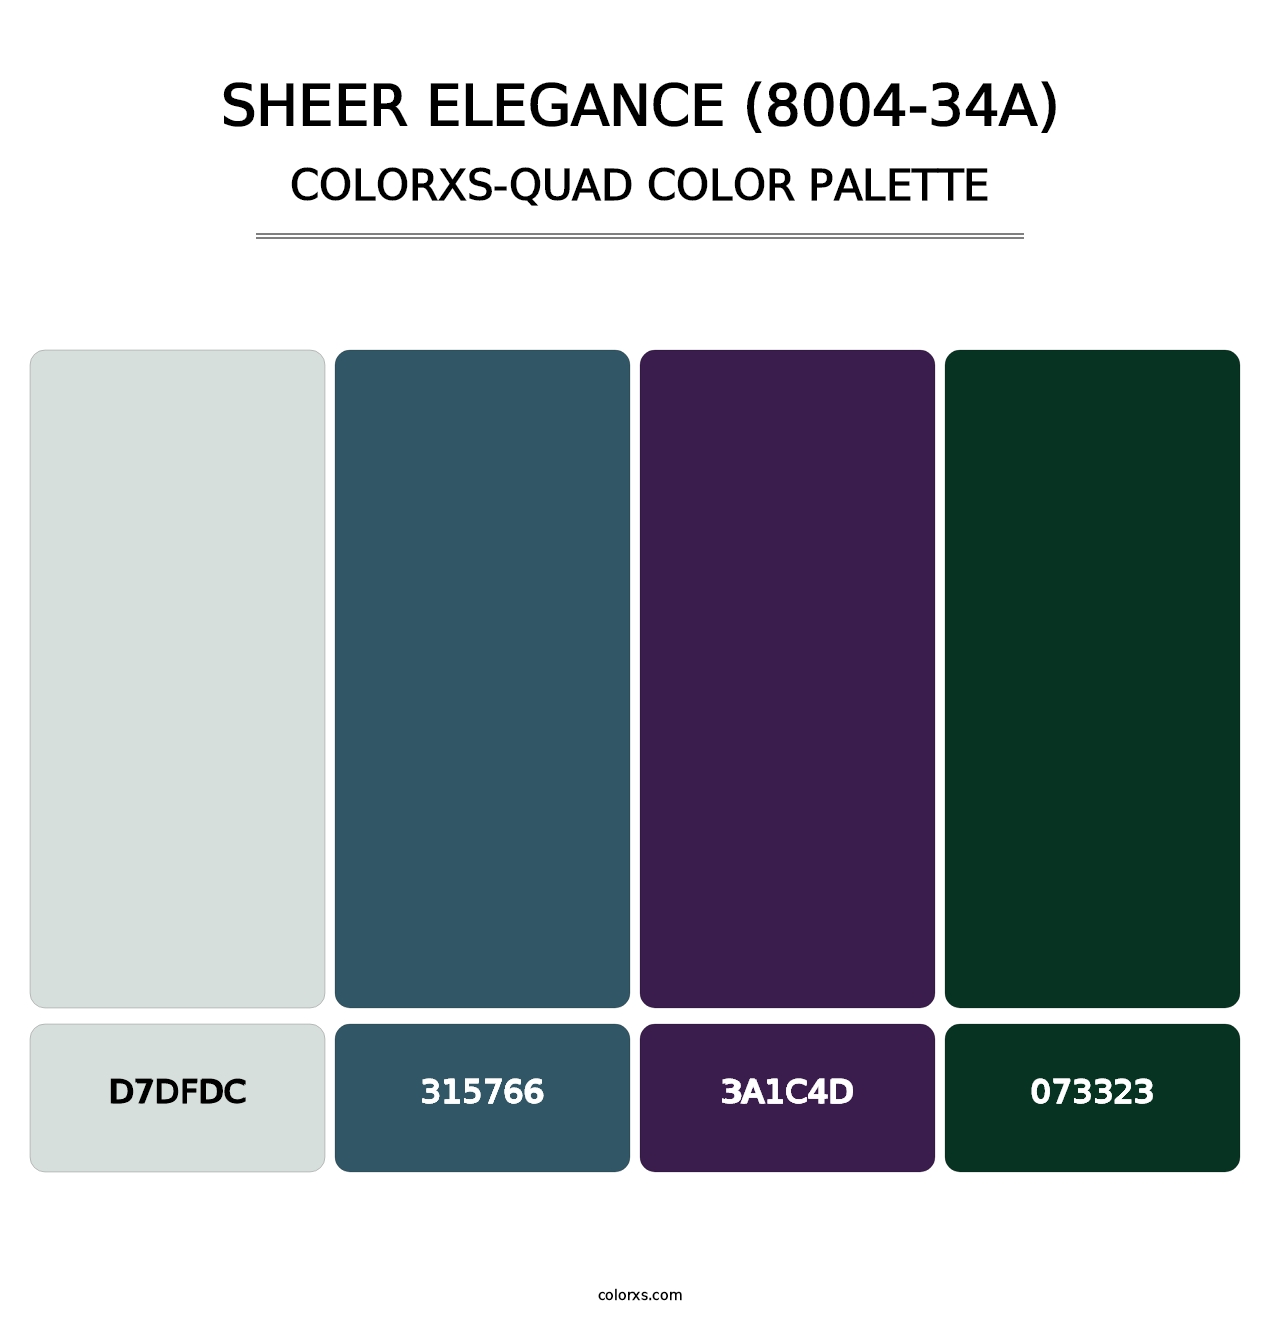 Sheer Elegance (8004-34A) - Colorxs Quad Palette